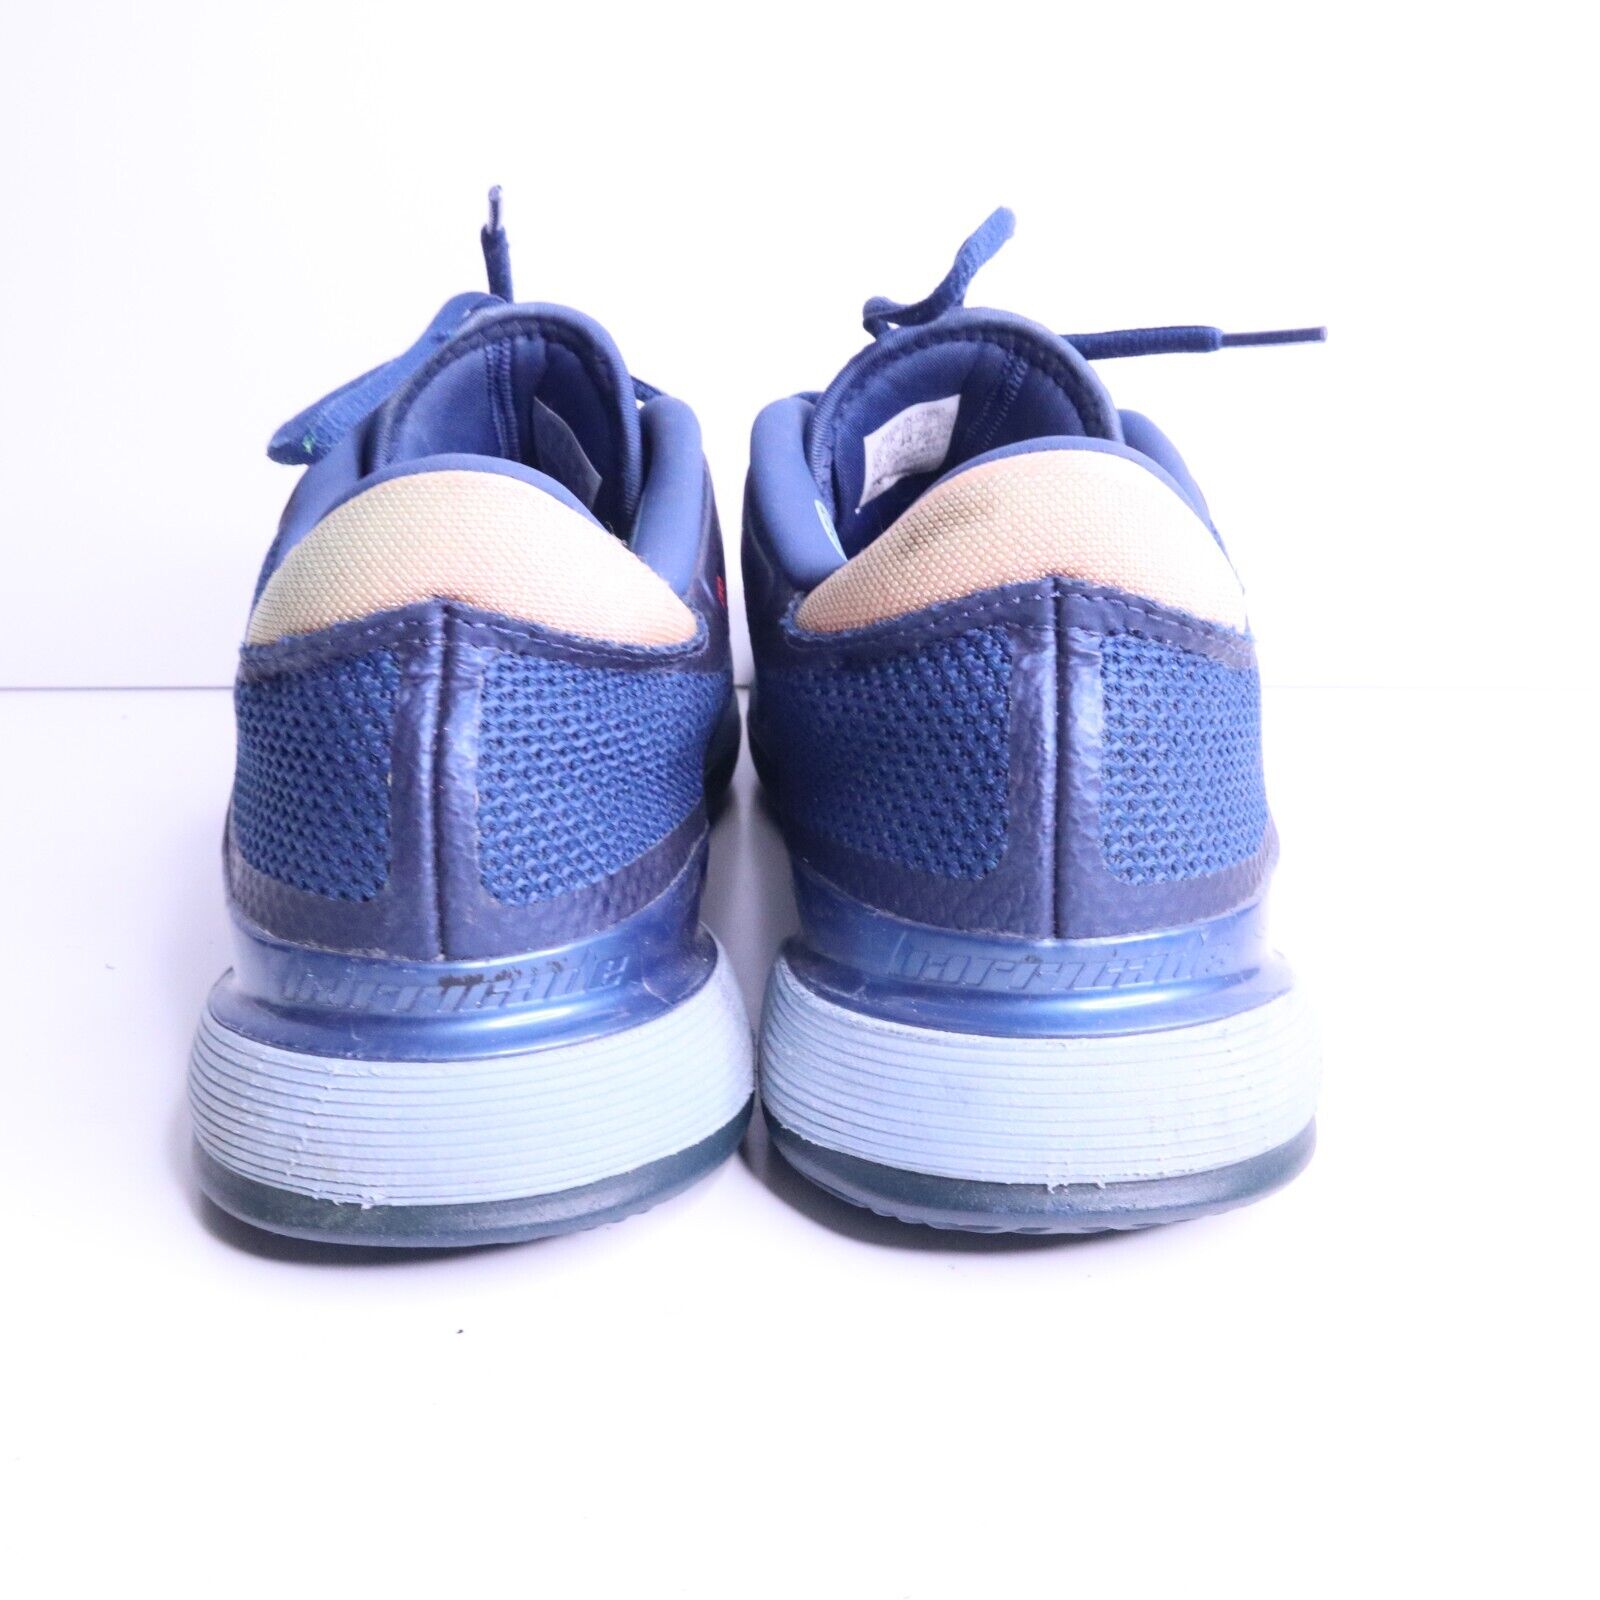 Adidas Men’s Barricade 2017 Tennis Shoe (Mystic Blue/Glow Orange) BA9073  Size 10